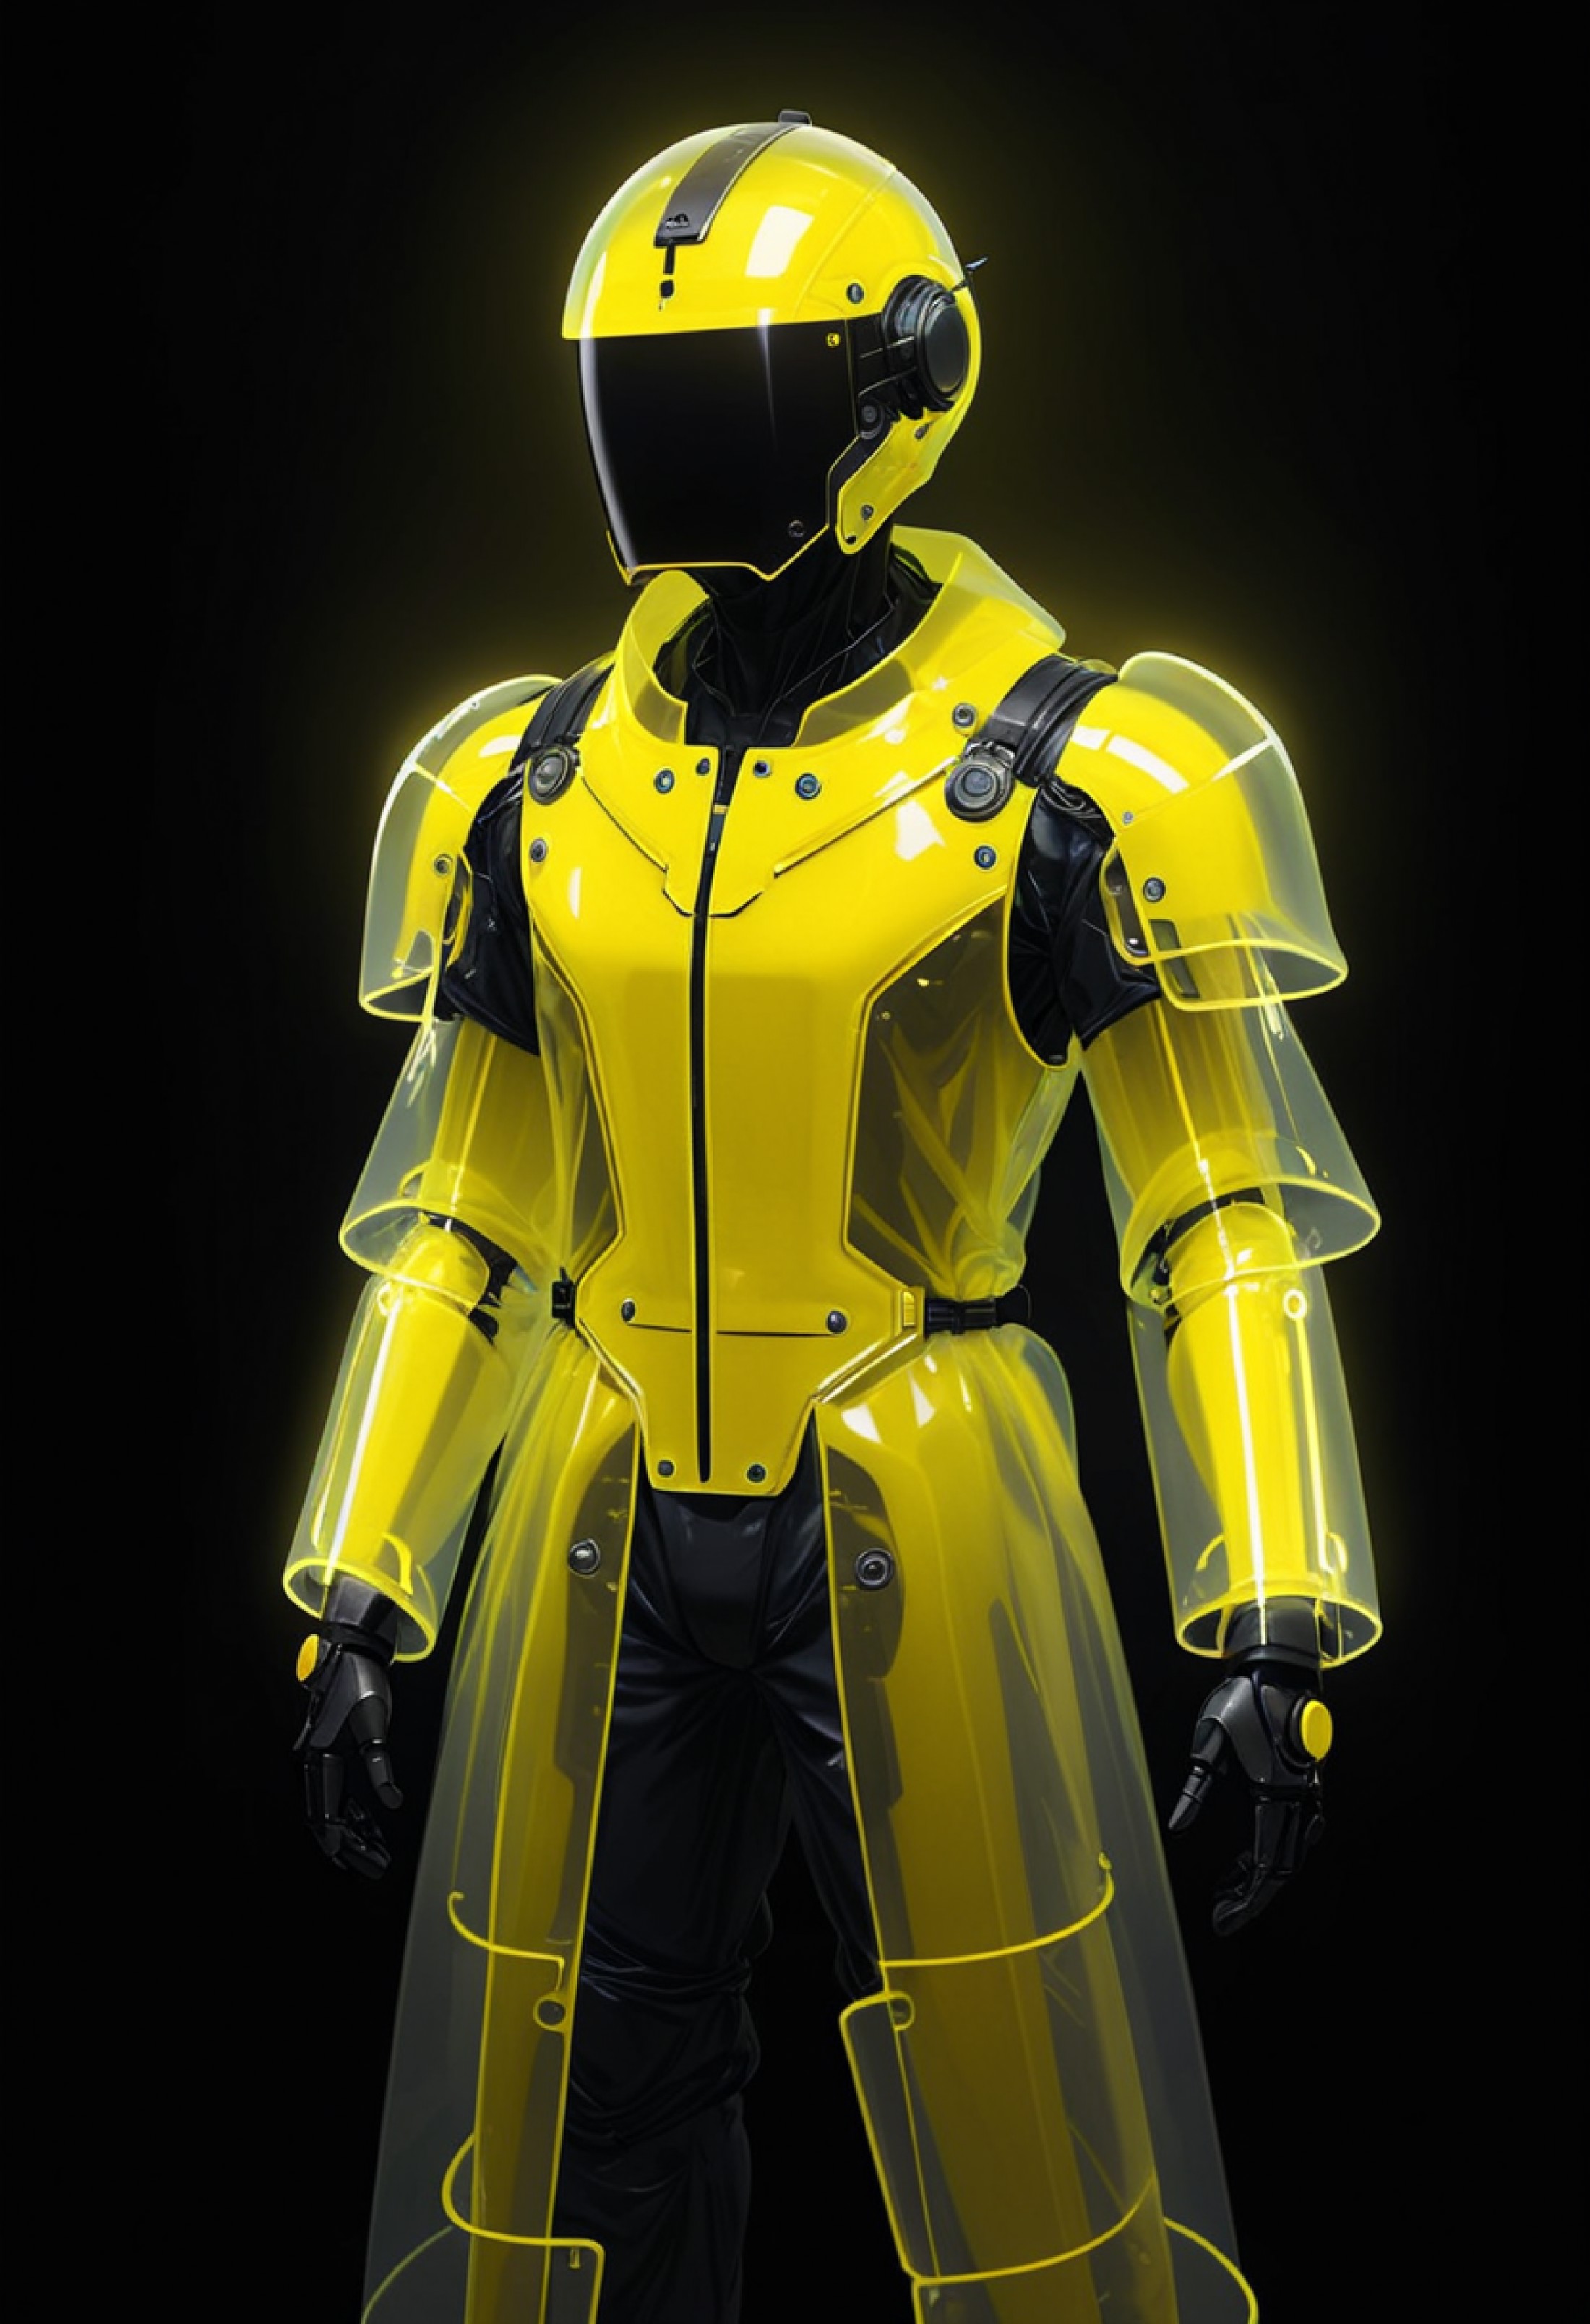 A cyberpunk robot wearing a transparent yellow mackintosh, glowing elements, masterpiece, best quality,